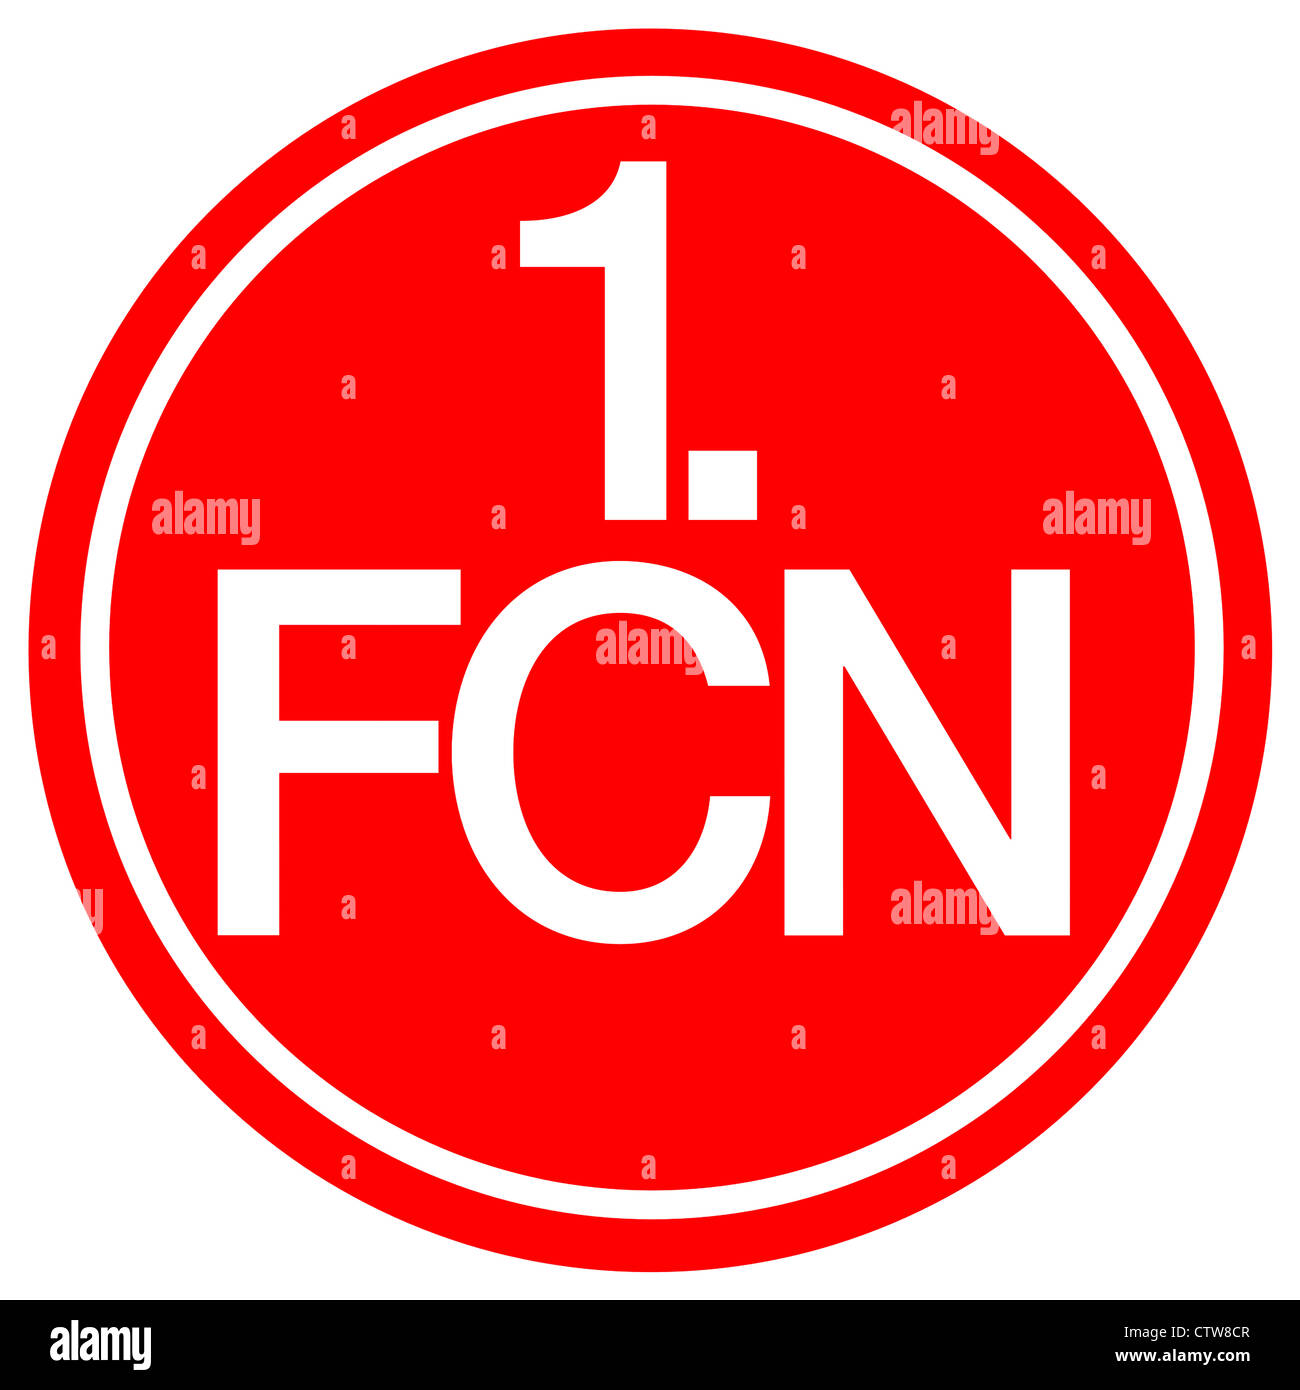 Logo of German football team 1. FC Nuremberg. Stock Photo